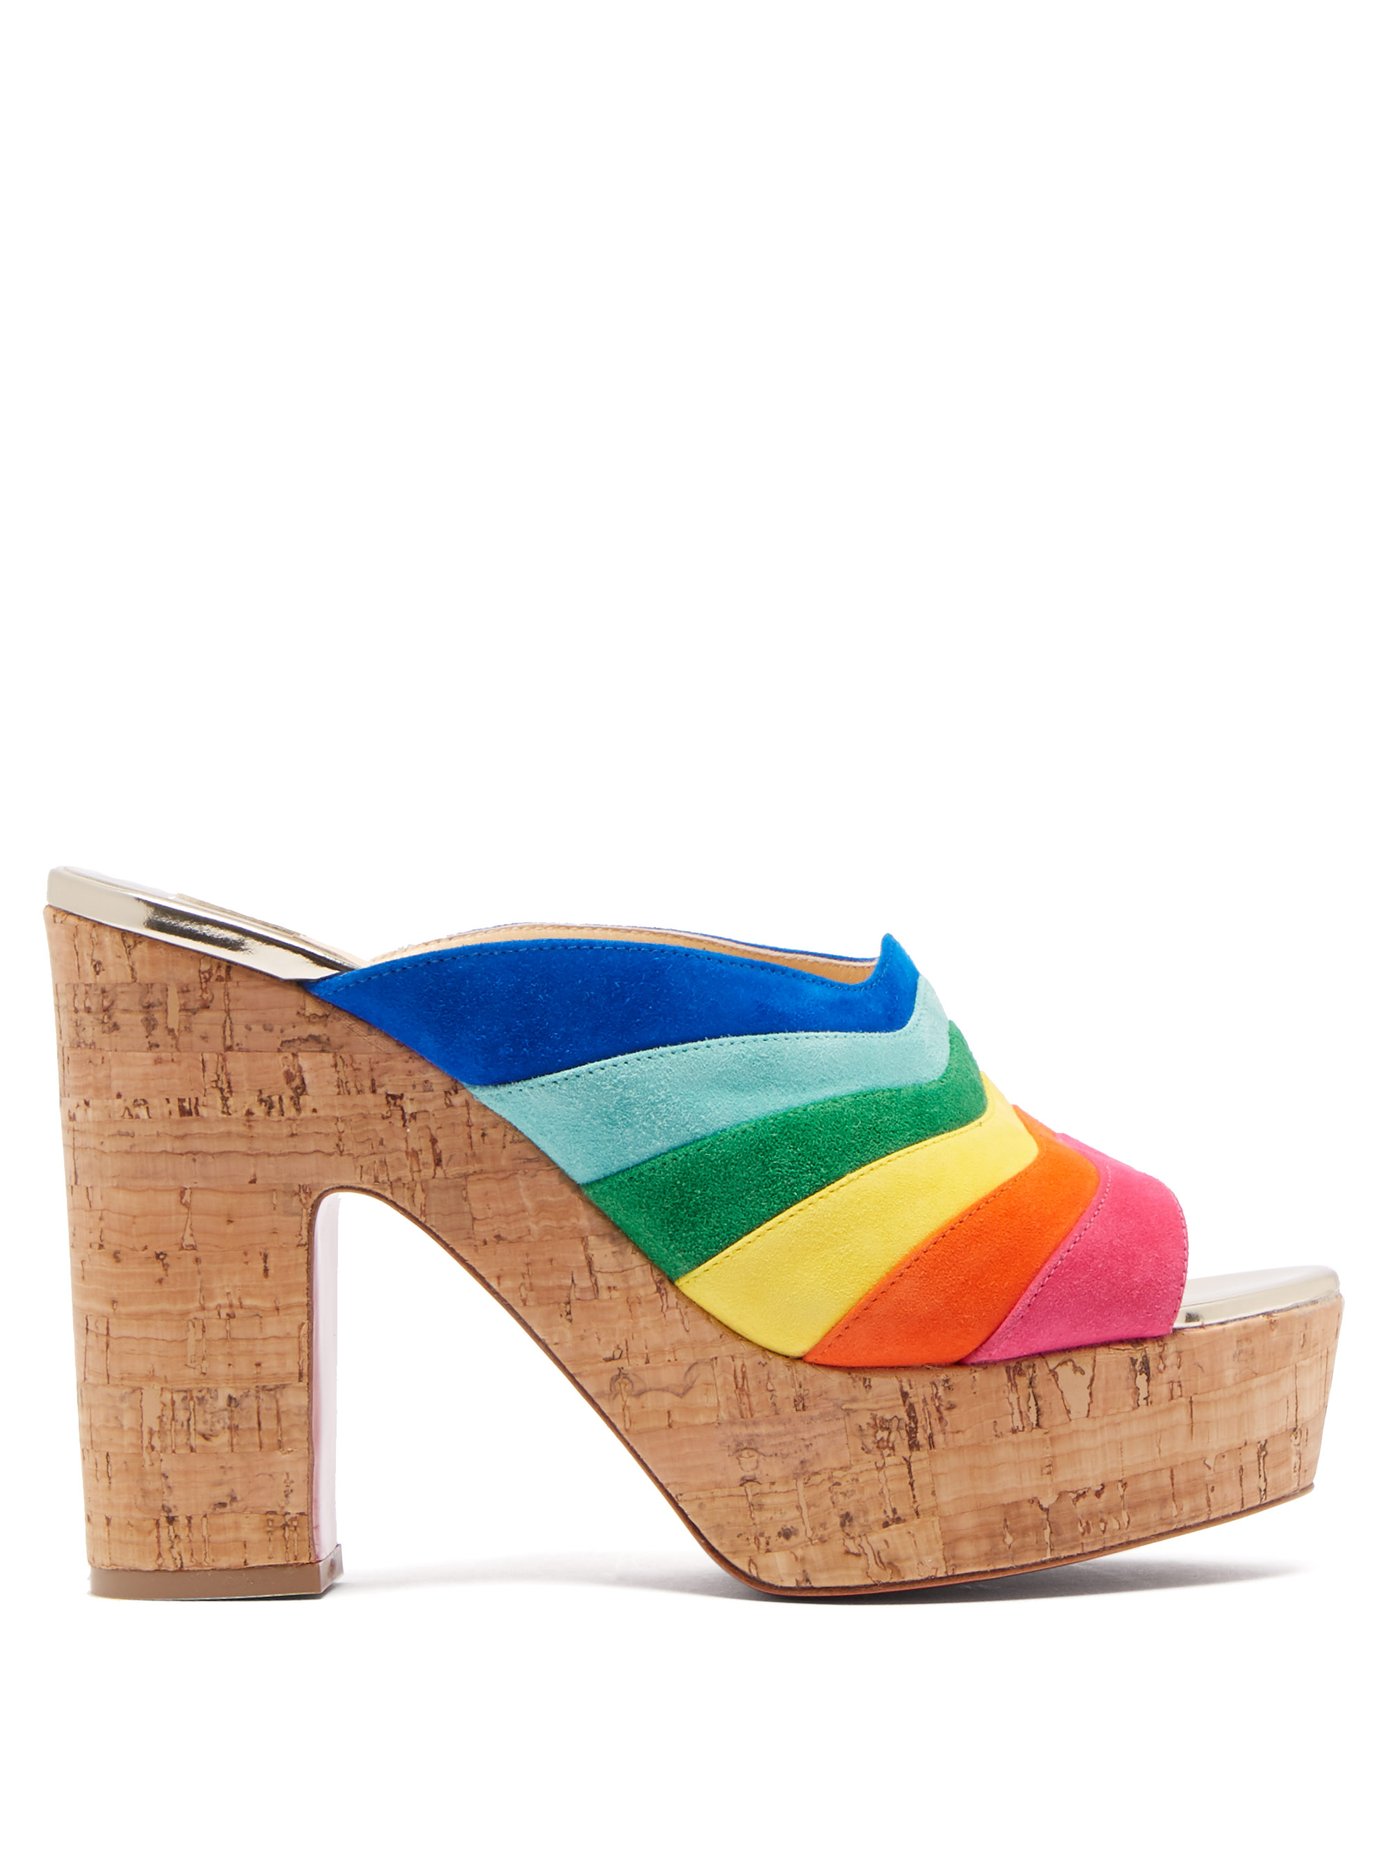 rainbow louboutin heels